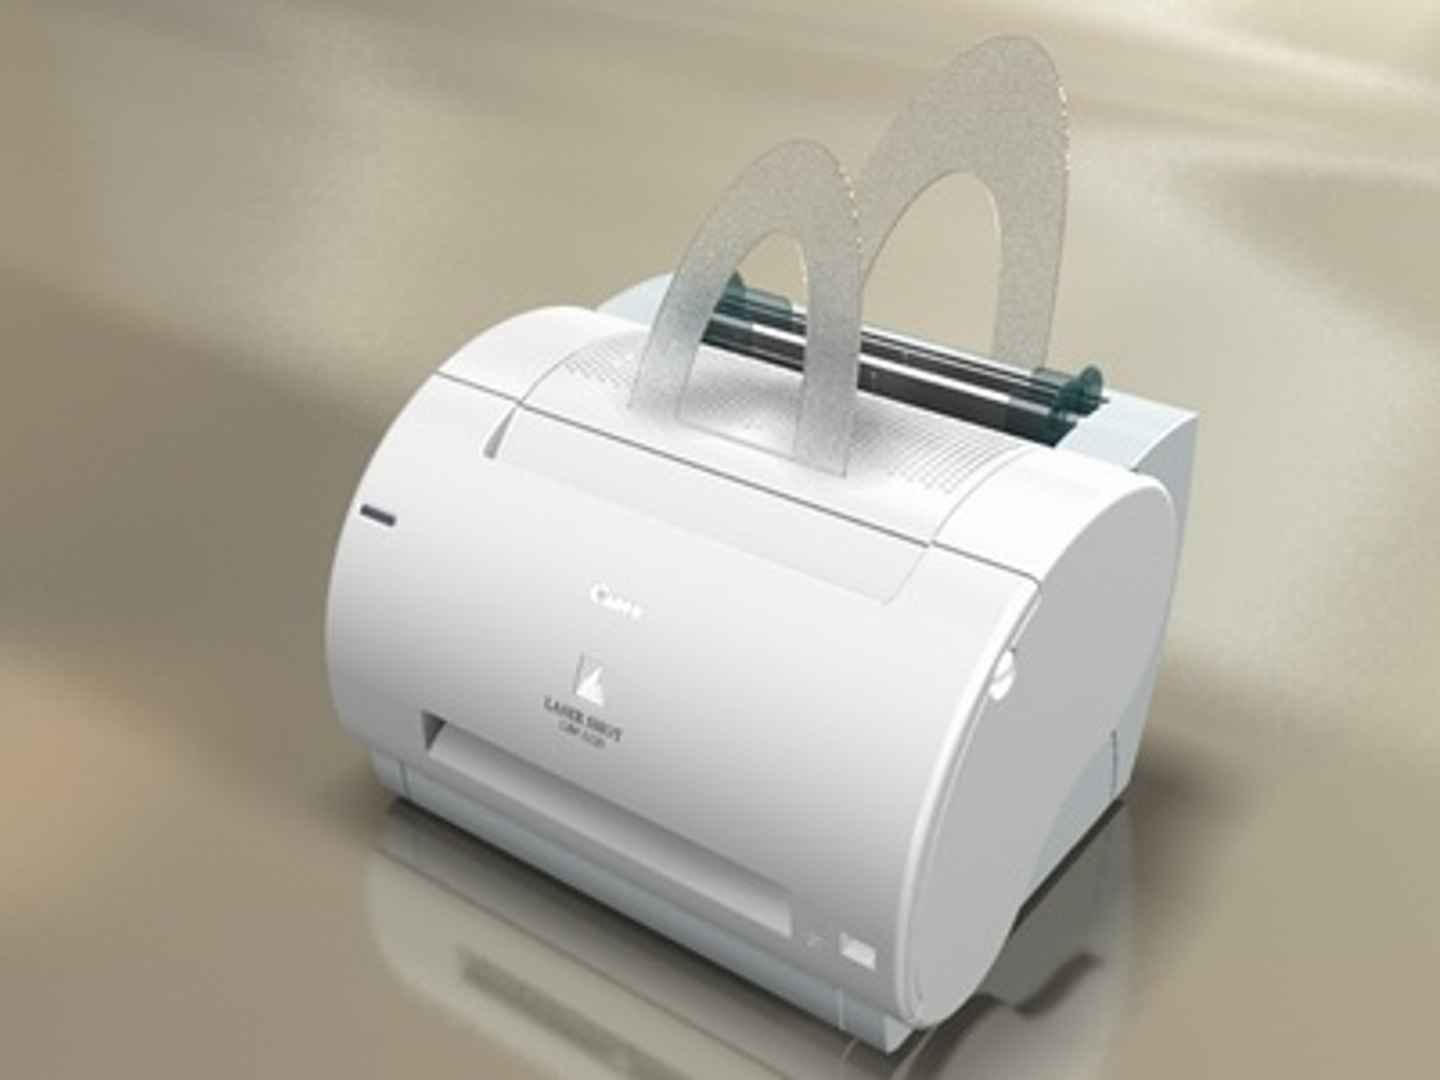 laser printer canon lbp-1120 3d model https://p.turbosquid.com/ts-thumb/SB/NQqDqP/8gaNgU5S/canon1/jpg/1202491693/1920x1080/fit_q87/13c39d7e706332b7af8836fd2102b6bbc7f766cc/canon1.jpg